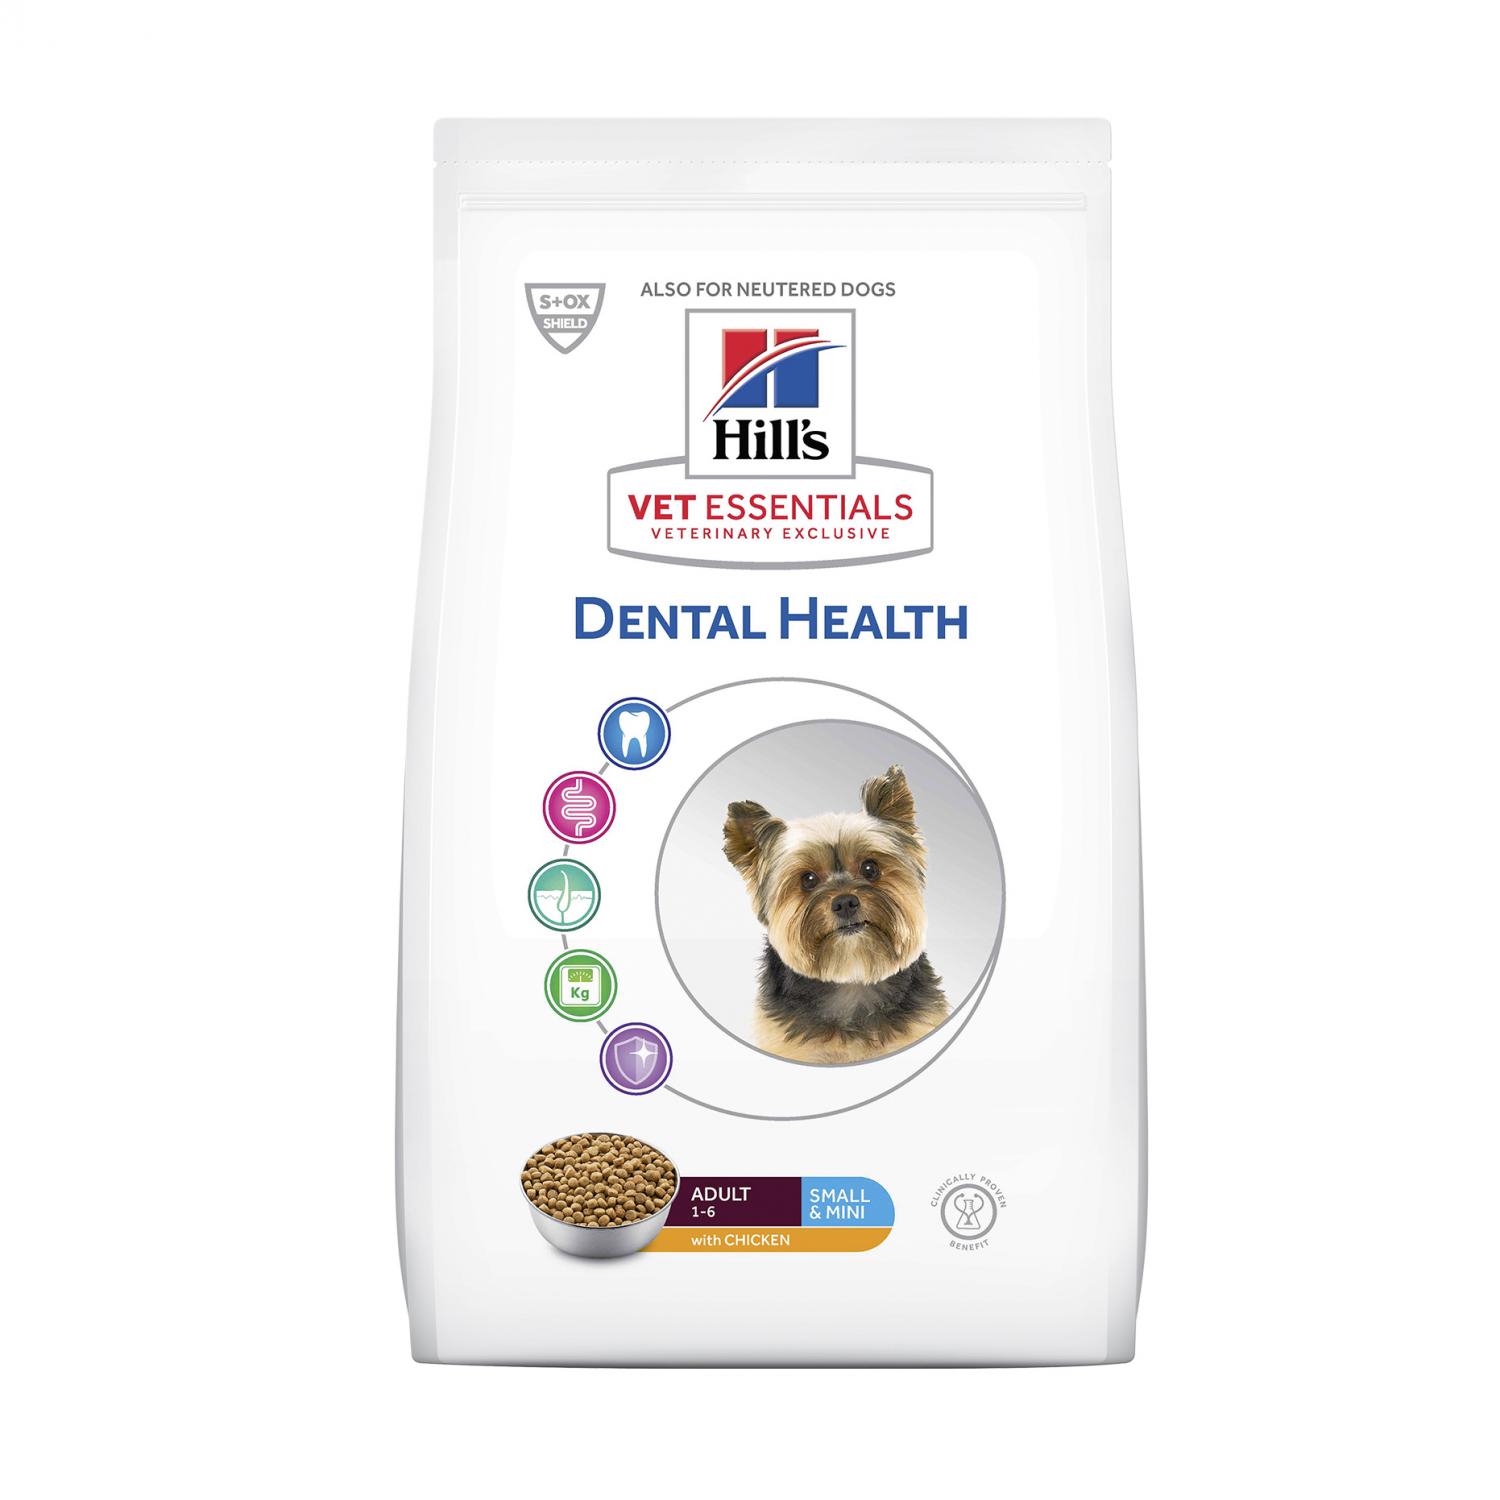 Hill’s VetEssentials Dental Health Adult Small & Mini hundfoder med kyckling